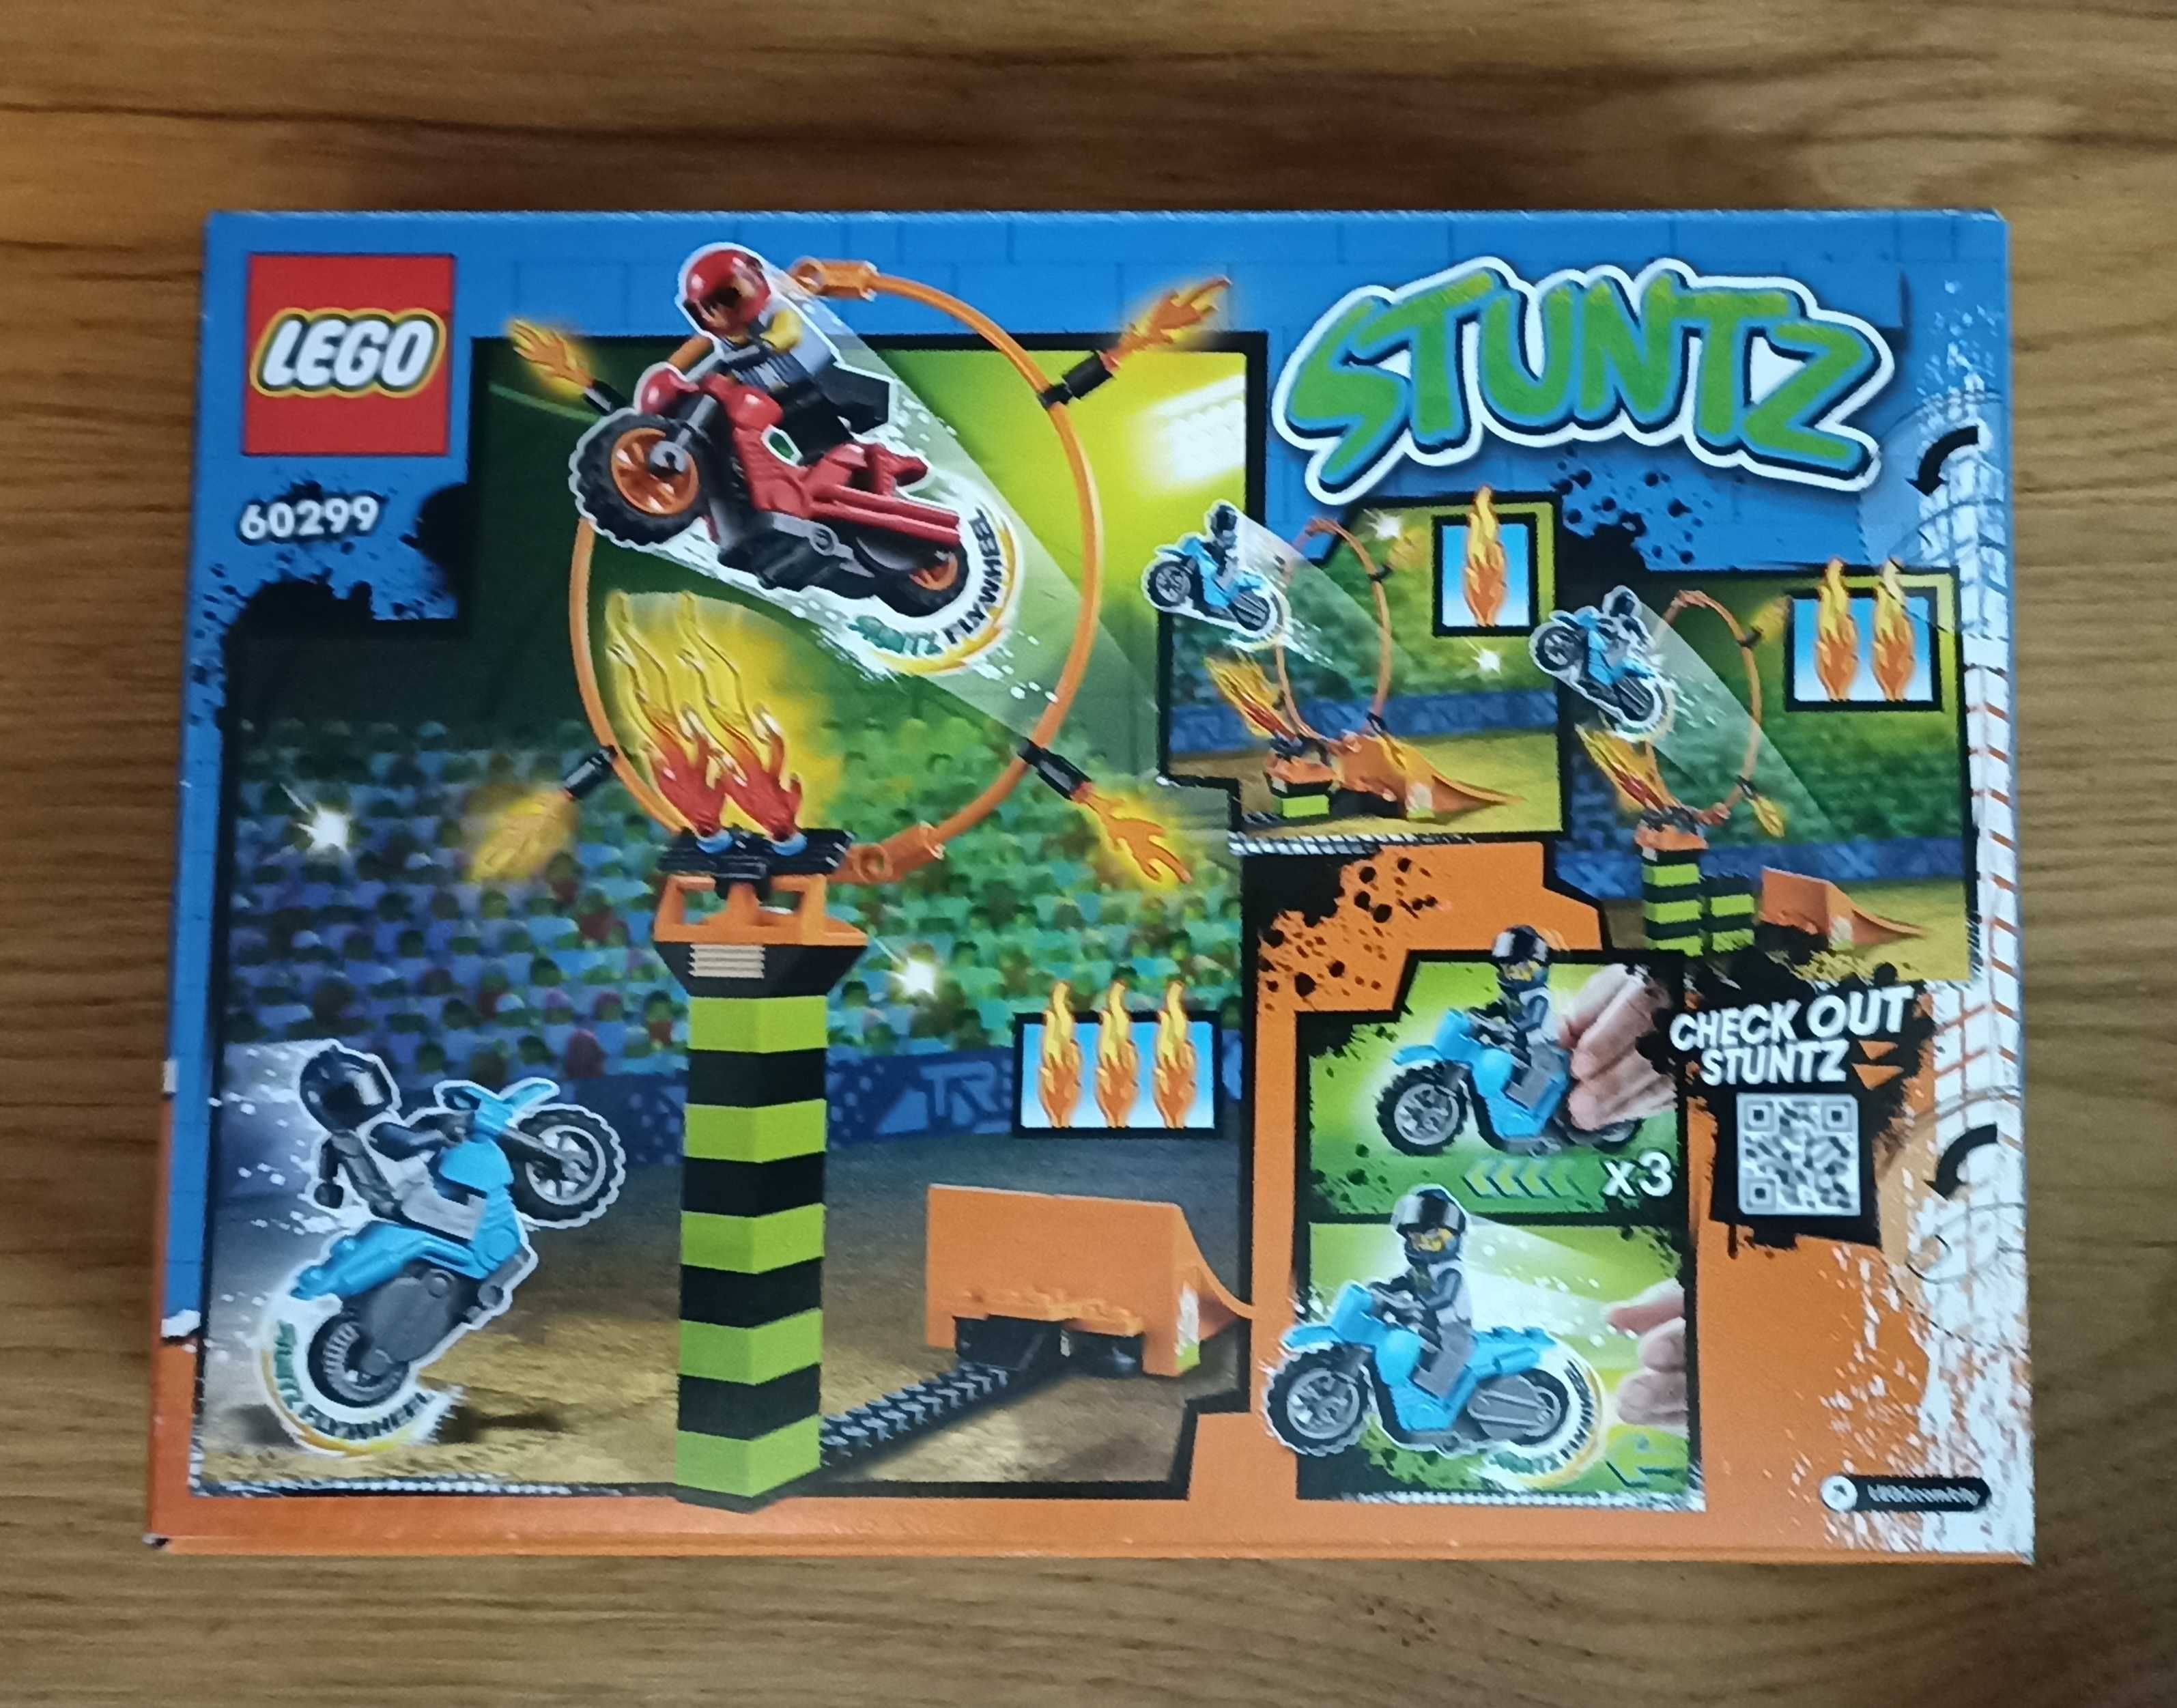 Klocki LEGO City Stuntz, Konkurs kaskaderski, 60299 - nowe